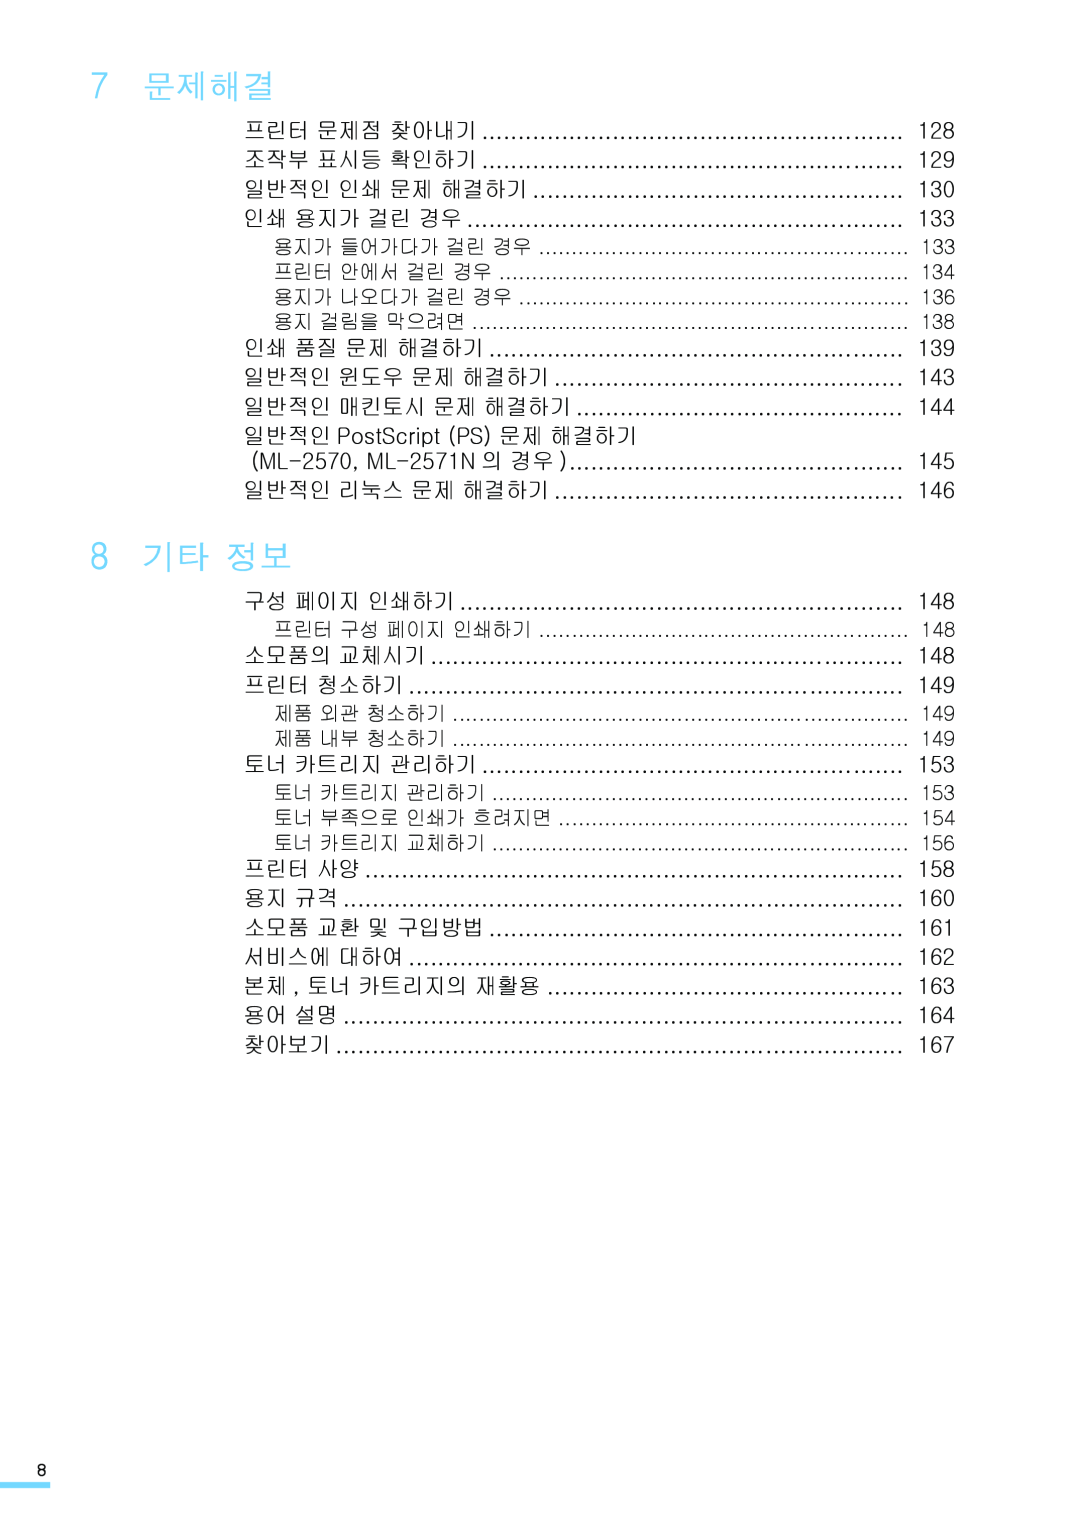 Samsung ML-2571N manual 문제해결, 기타 정보 